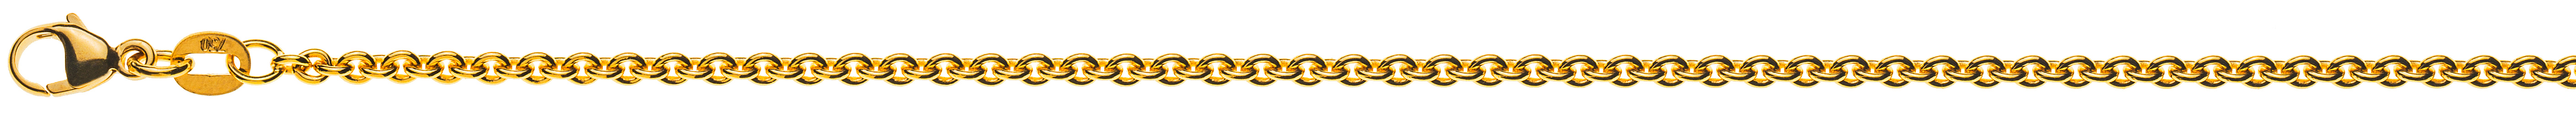 AURONOS Prestige Necklace Yellow Gold 18K Round Anchor 38cm 2.3mm